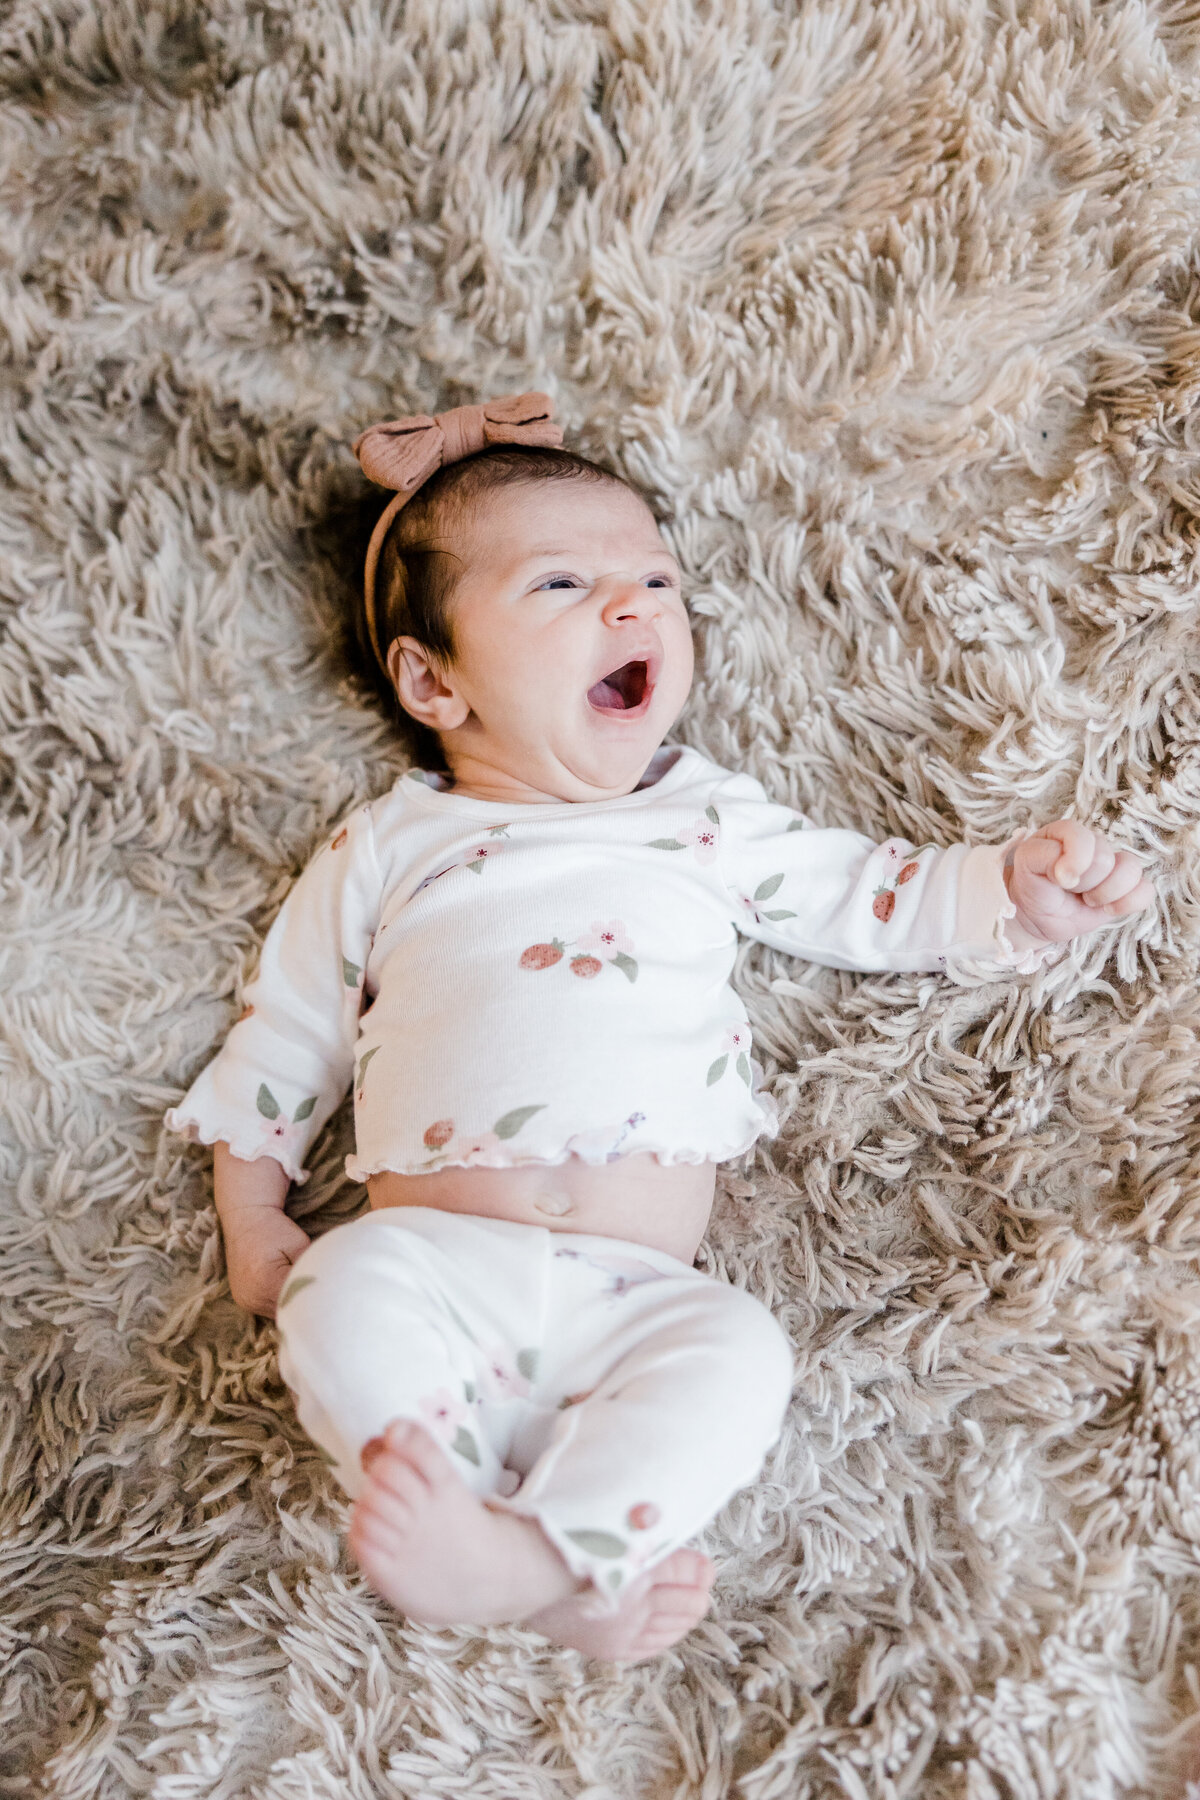 baby girl yawning